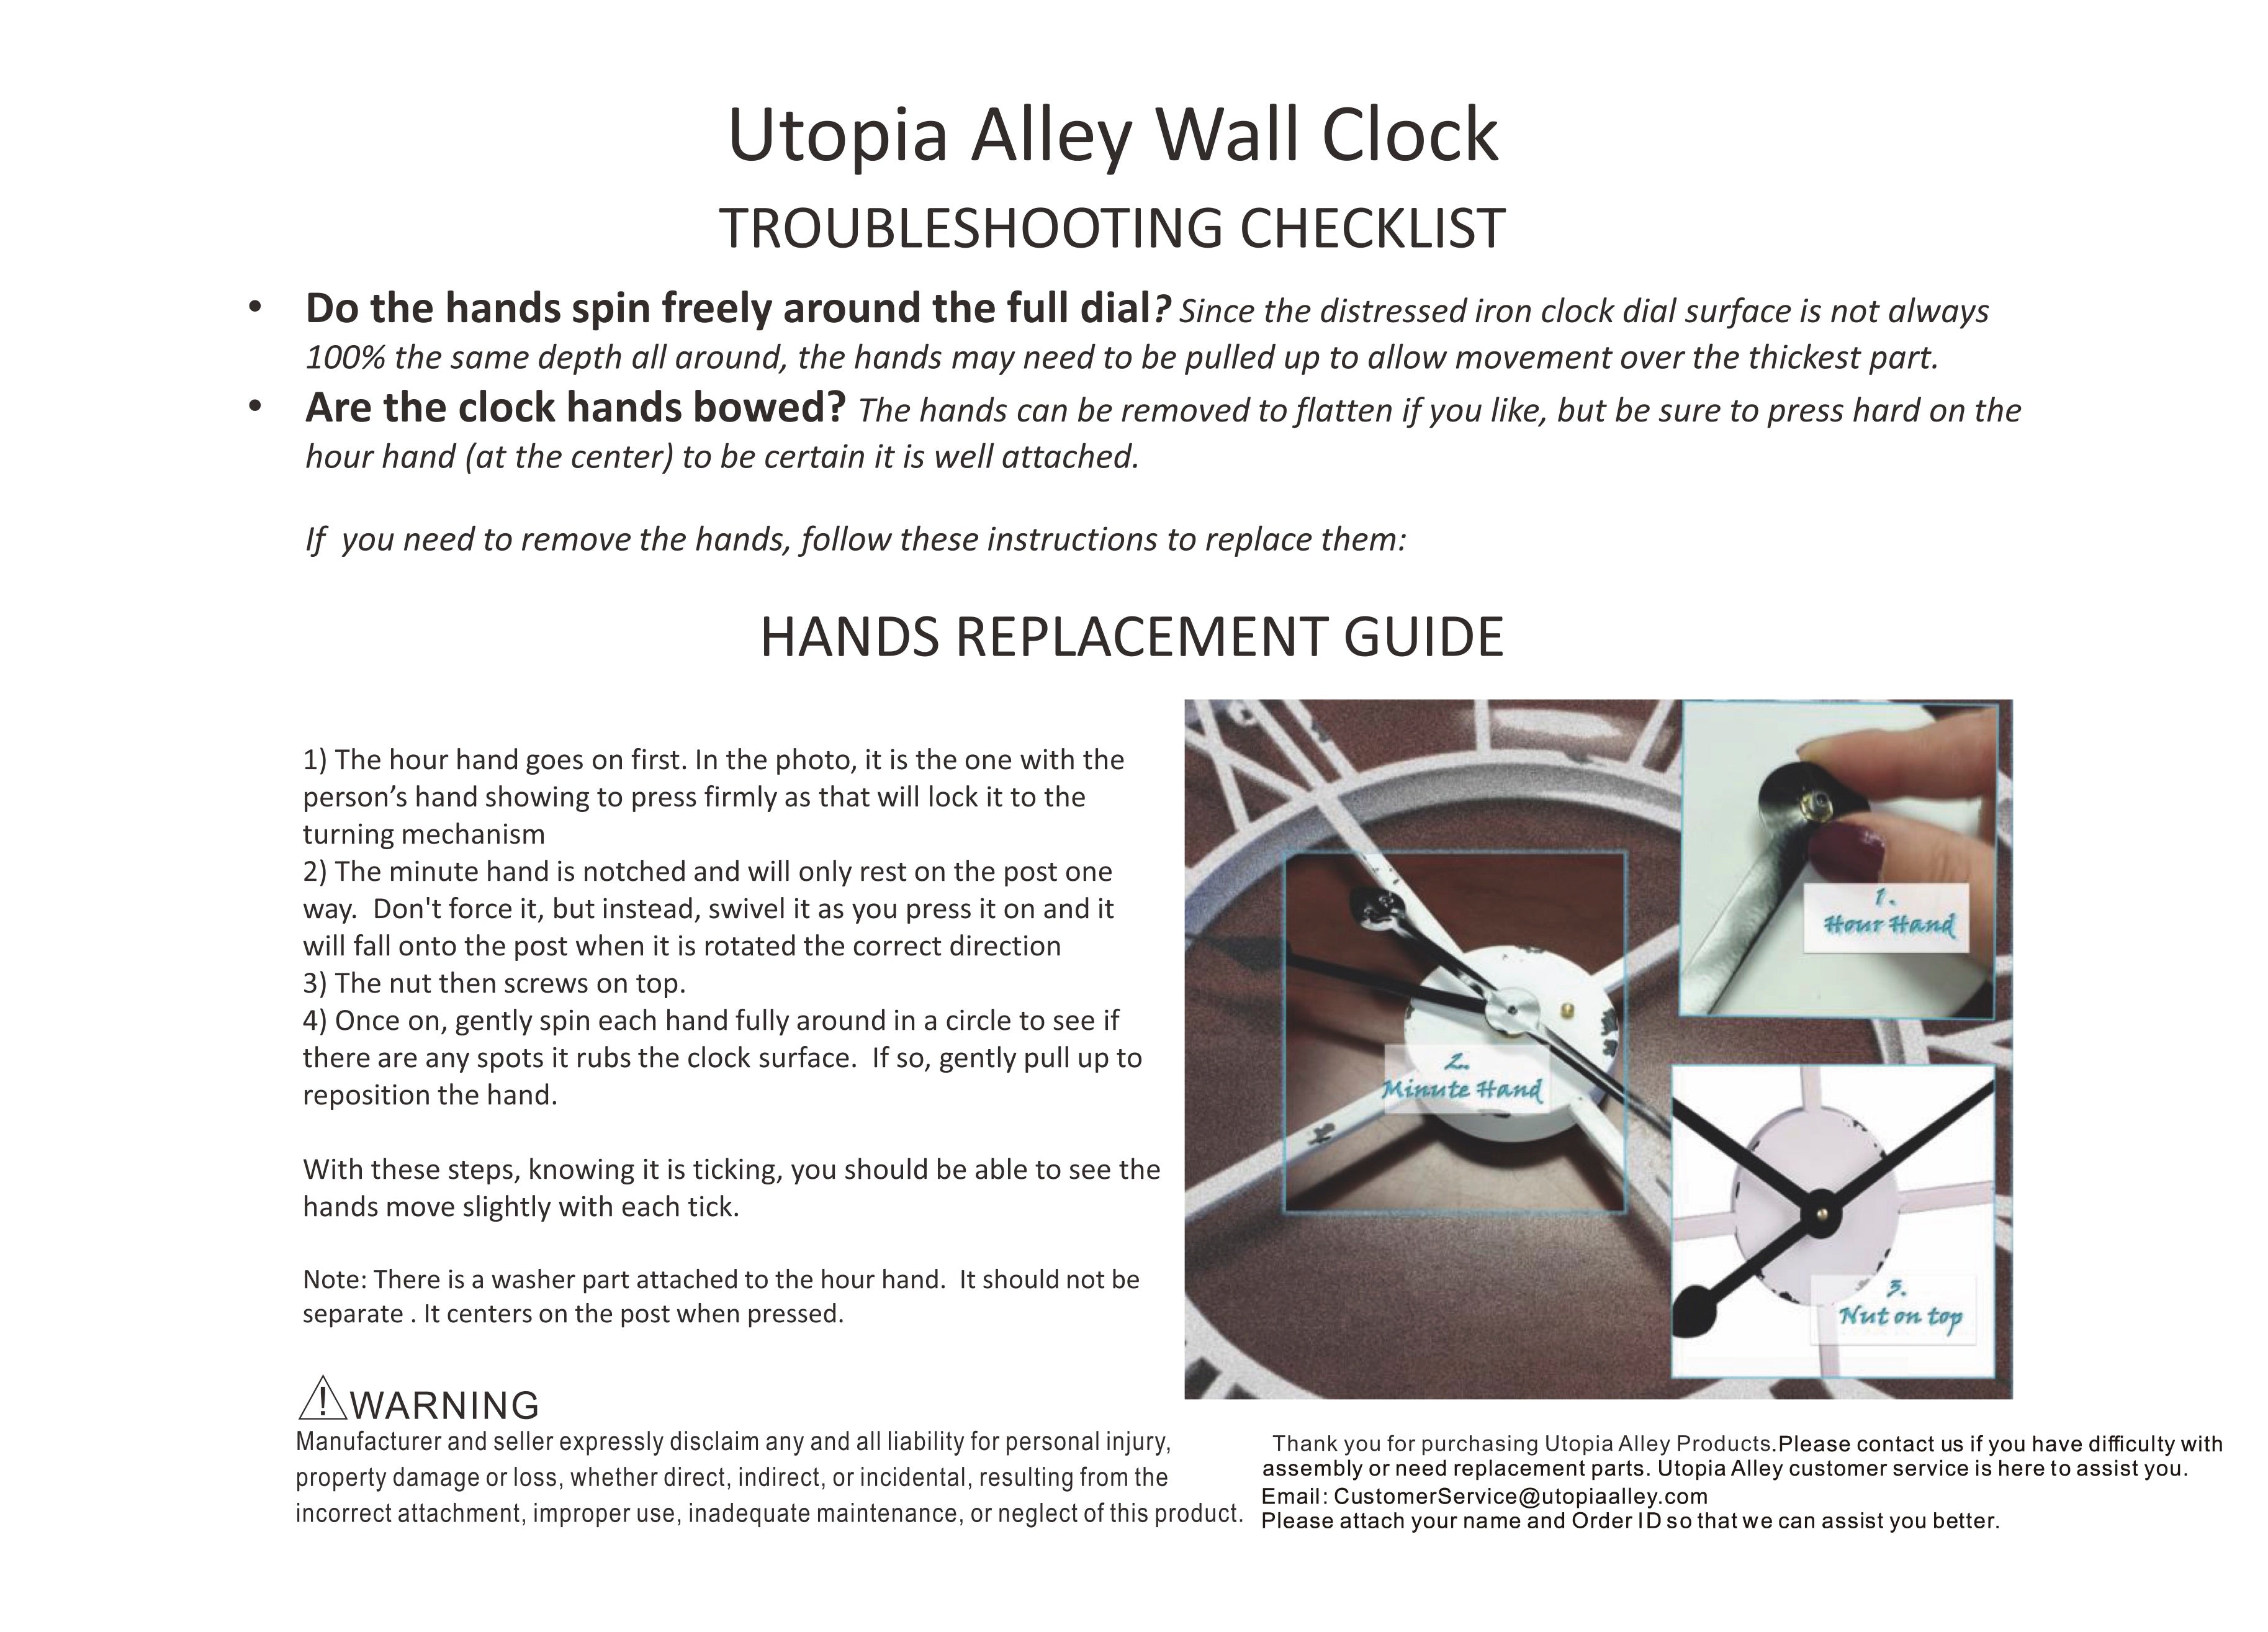 Loft97 3-Piece Oversize Roman Square Wall Clock, 32